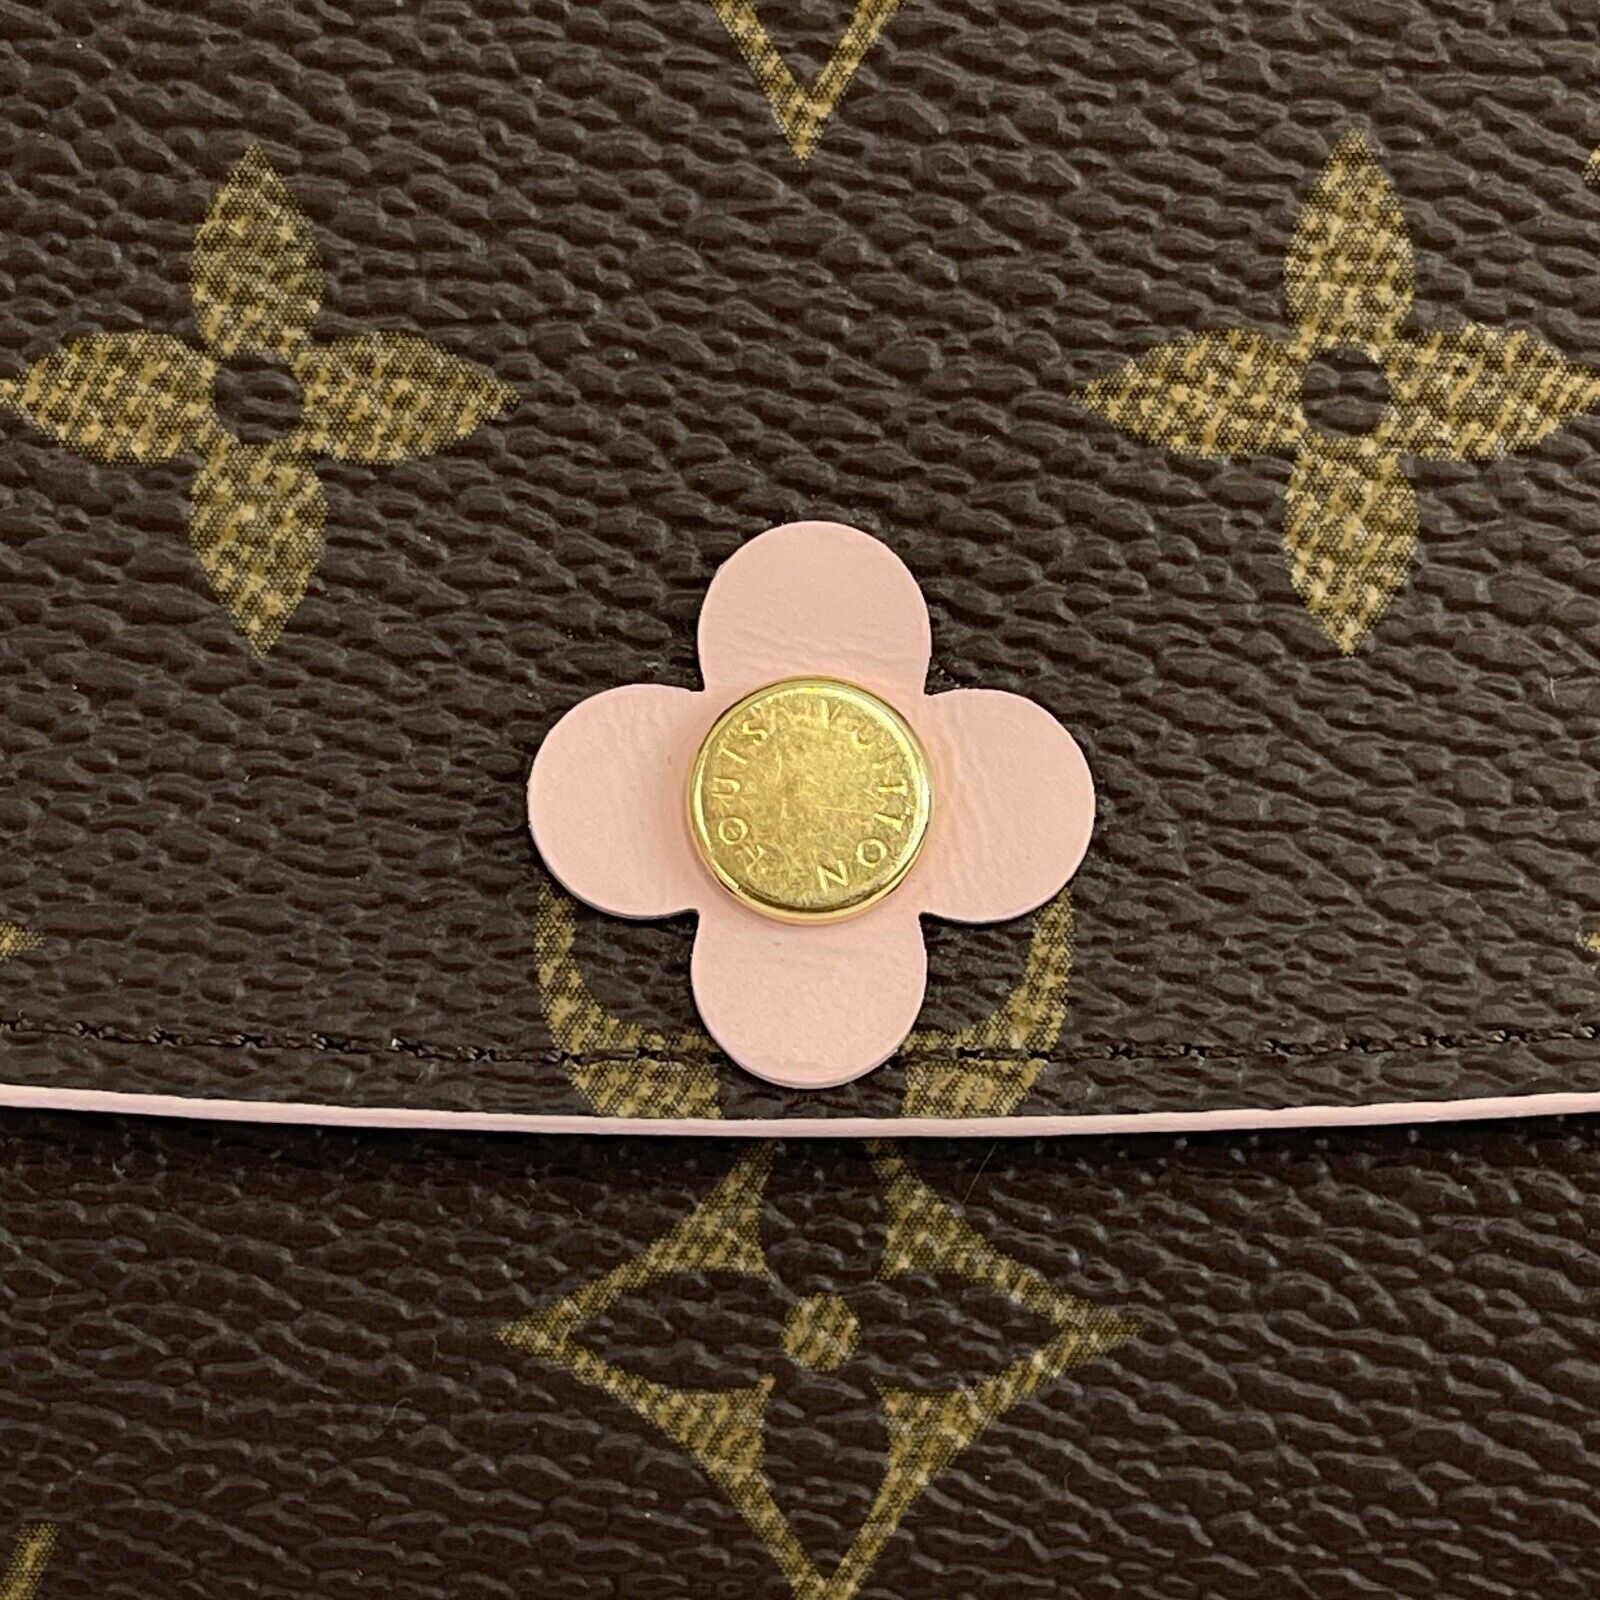 Louis Vuitton Monogram Bloom Flower Emilie Wallet 599781